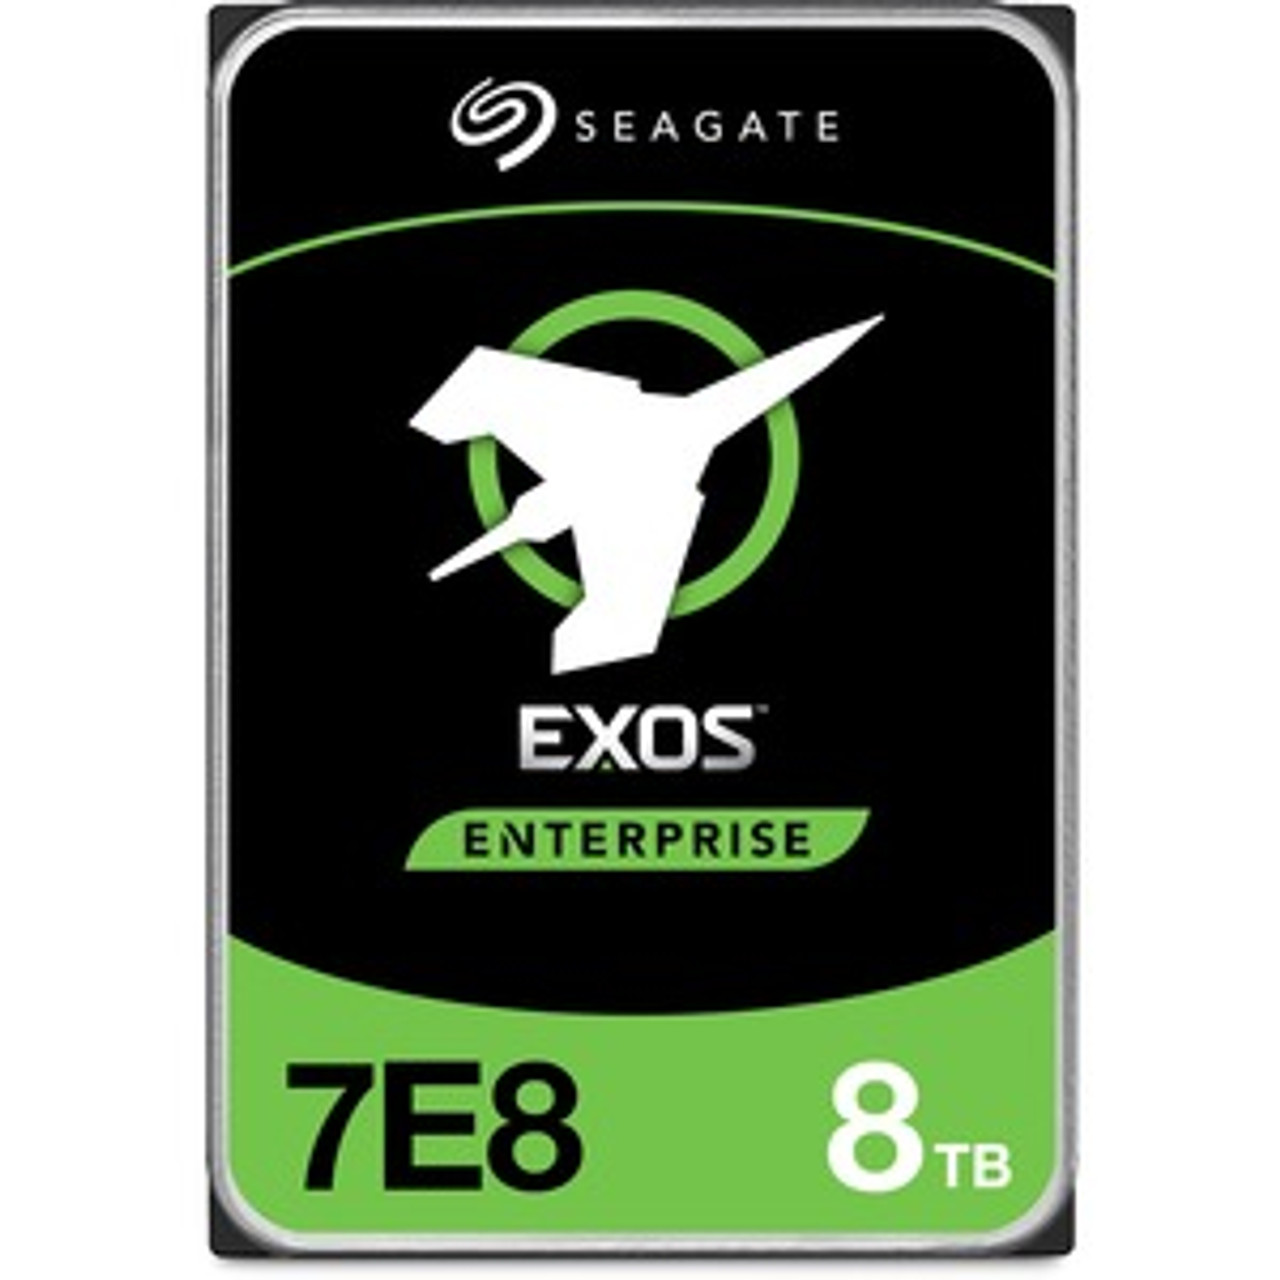 ST8000NM000A-20PK Seagate Exos 7E8 8TB 7200RPM SATA 6Gbps 256MB Cache (512e) 3.5-inch Internal Hard Drive (20-Pack)